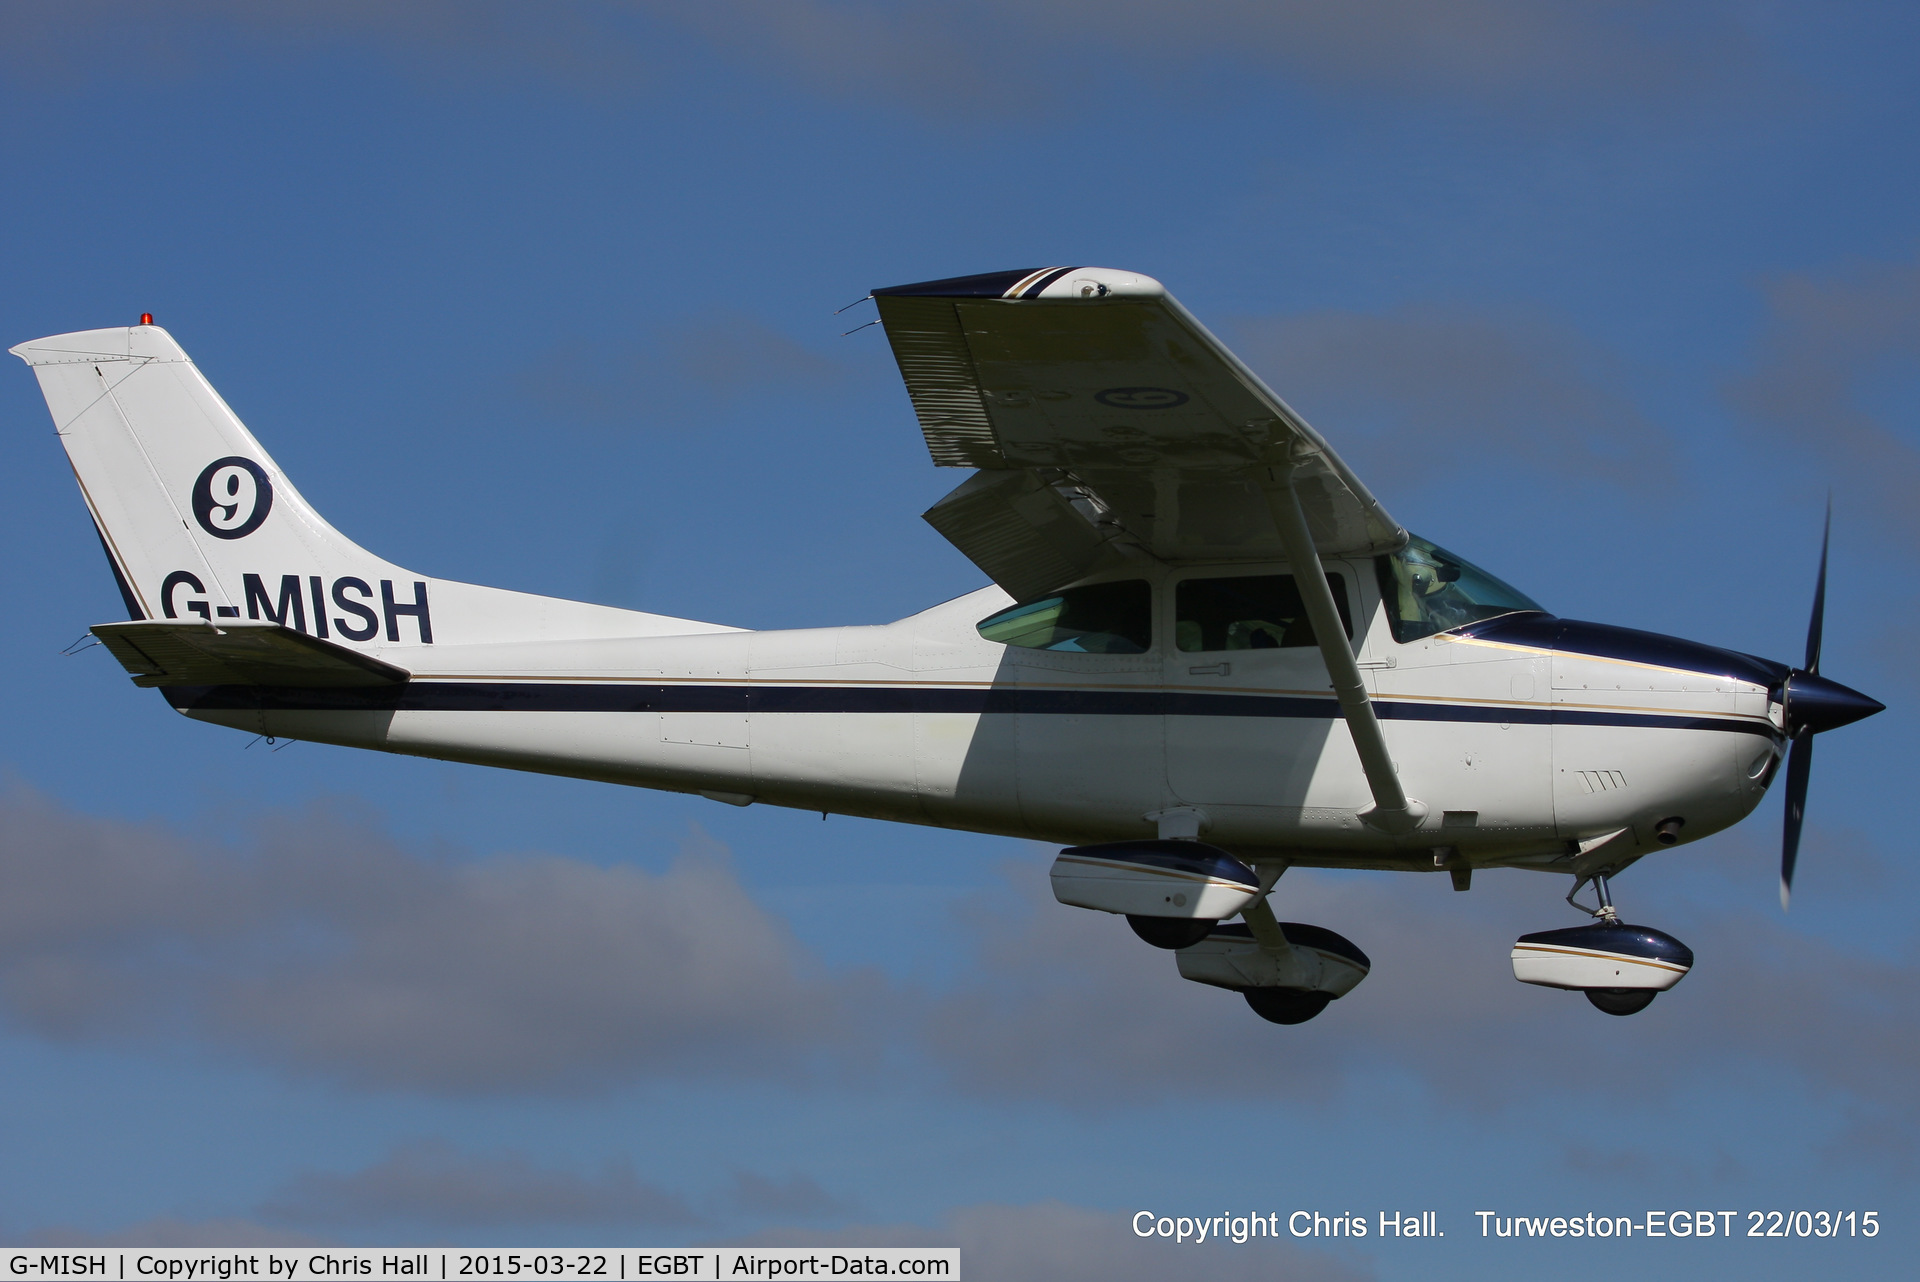 G-MISH, 1981 Cessna 182R Skylane C/N 182-67888, at the Vintage Aircraft Club spring rally